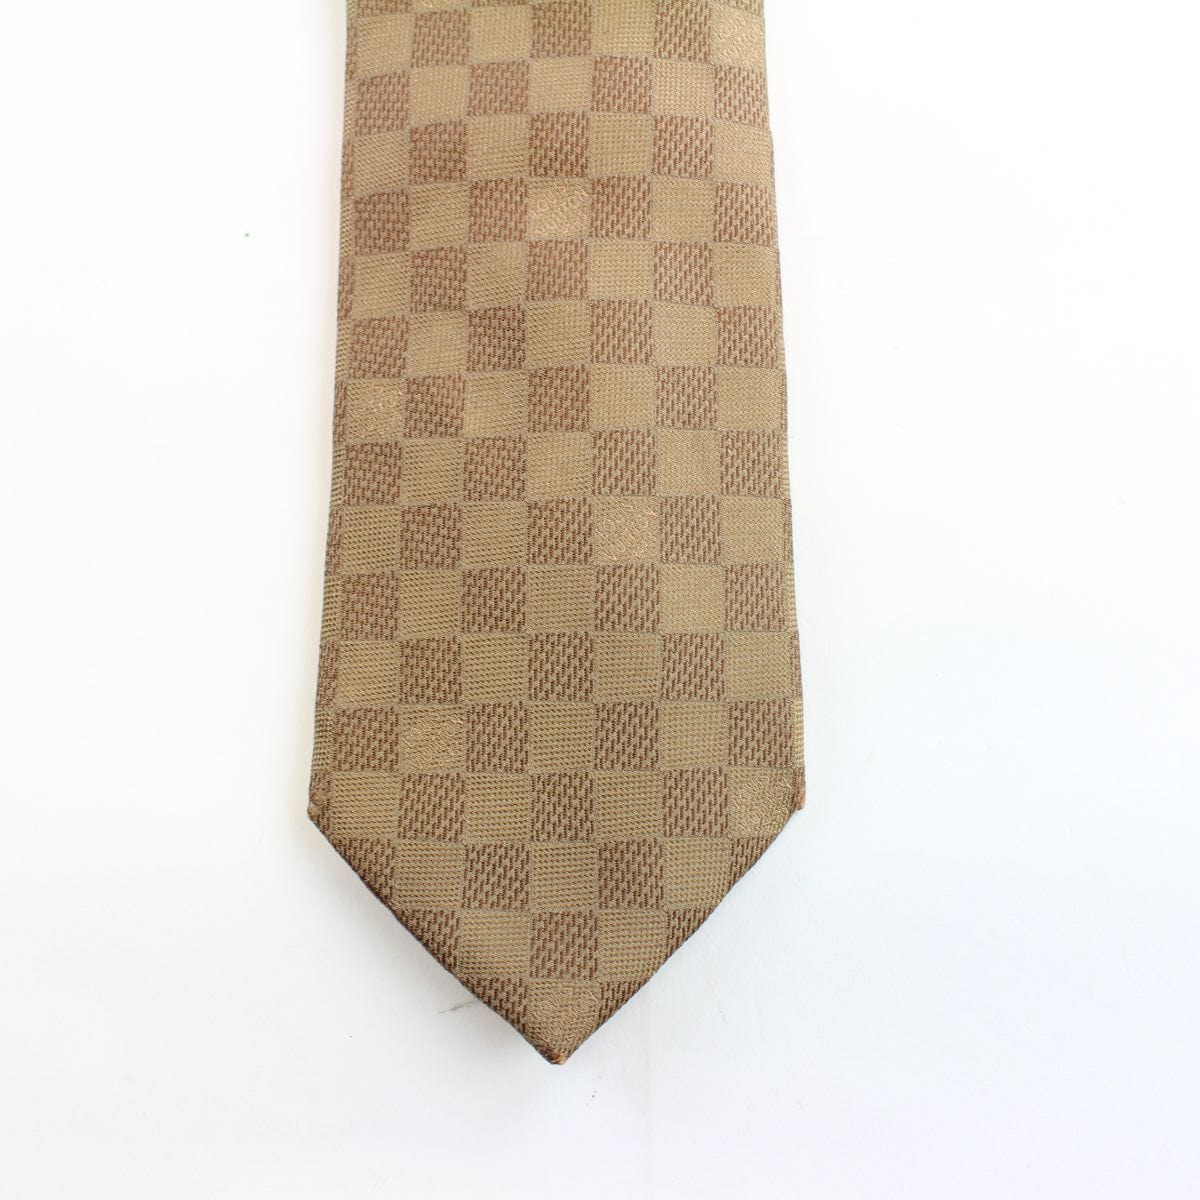 Louis vuitton checkered tie brown - SaruGeneral